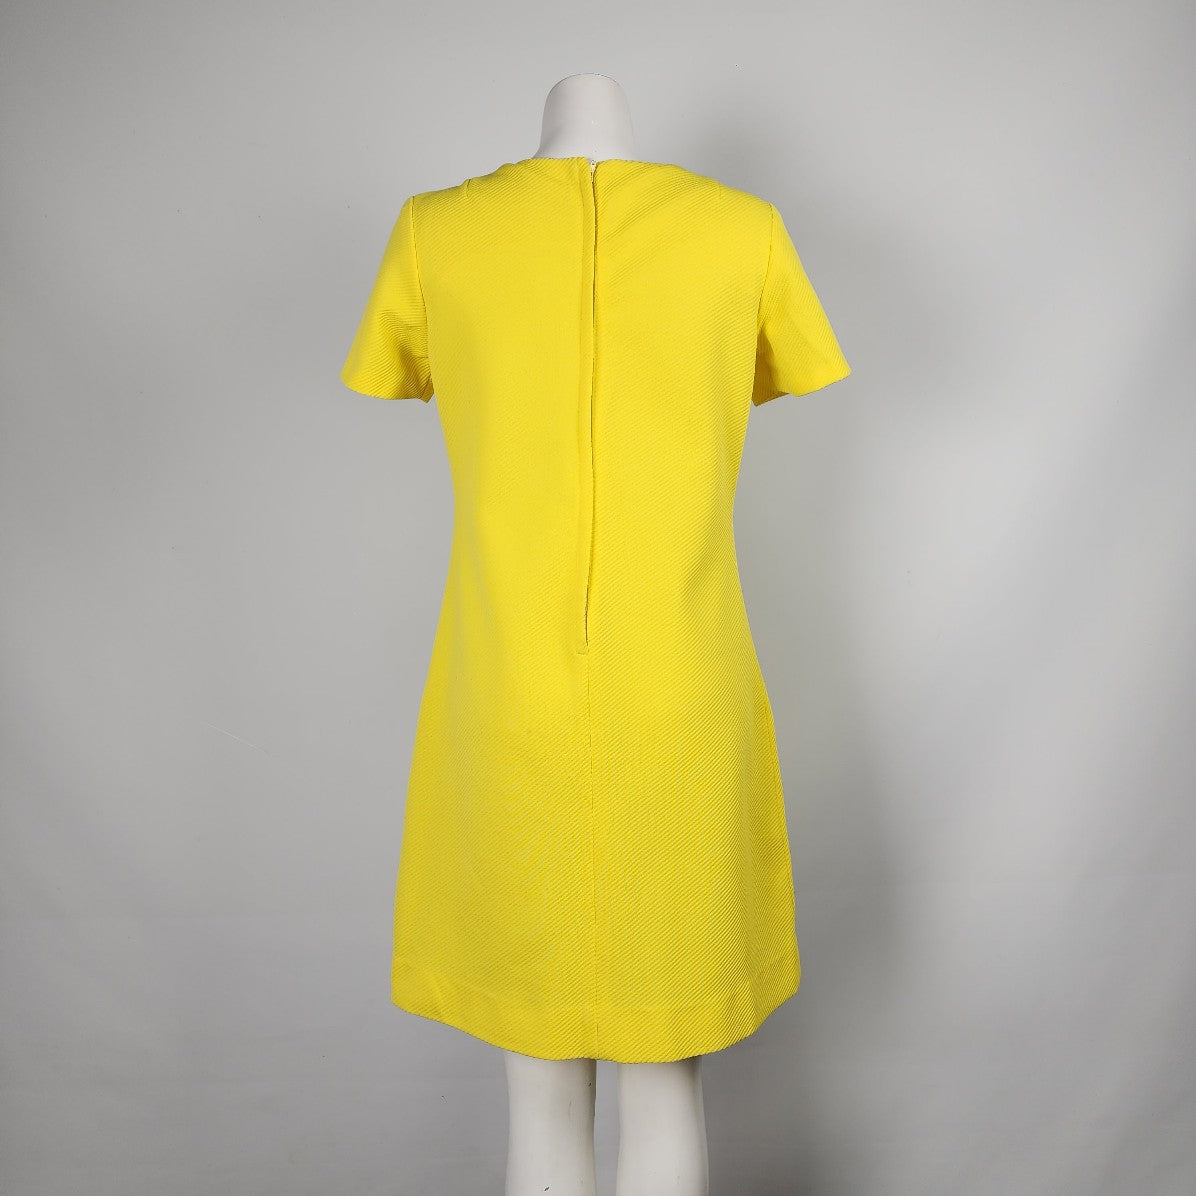 Vintage 60s Yellow Short Sleeve Shift Dress Size M